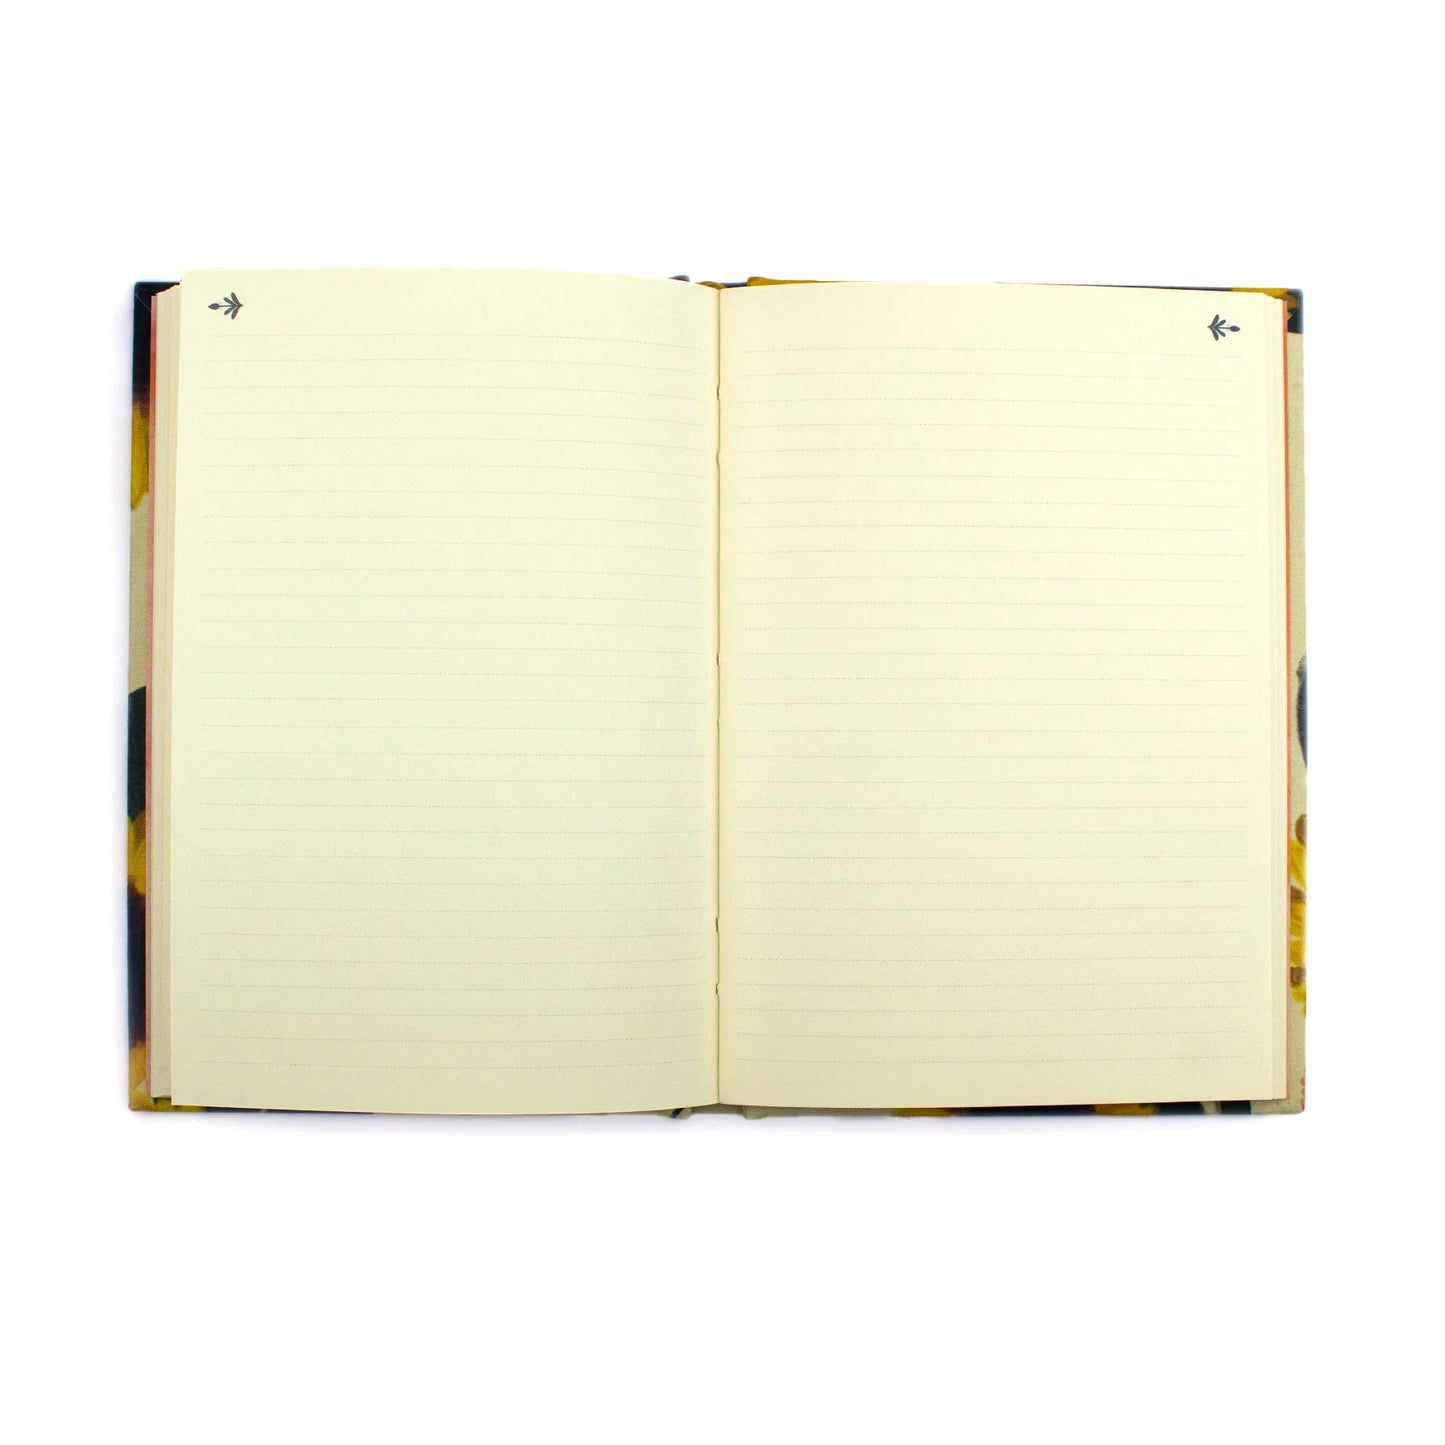 Hosana Revival Notebook: Savannah, Lined